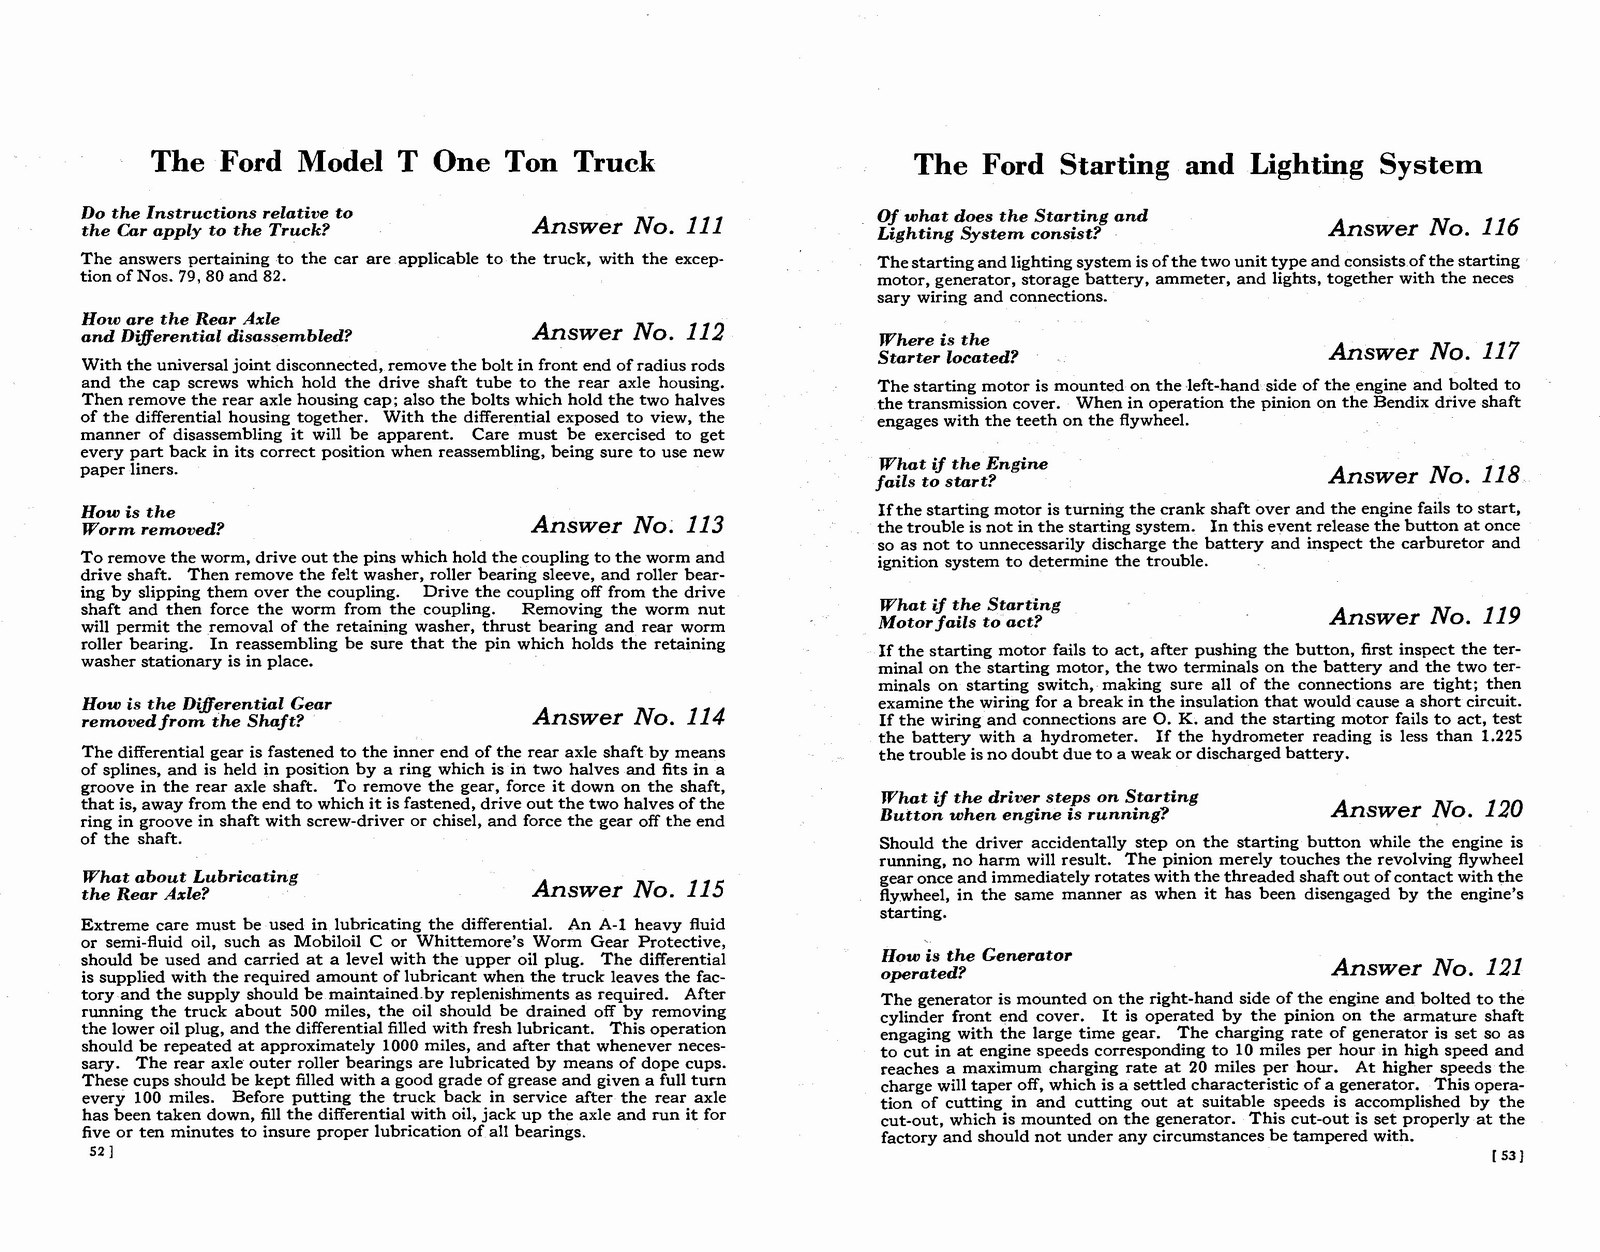 n_1925 Ford Owners Manual-52-53.jpg